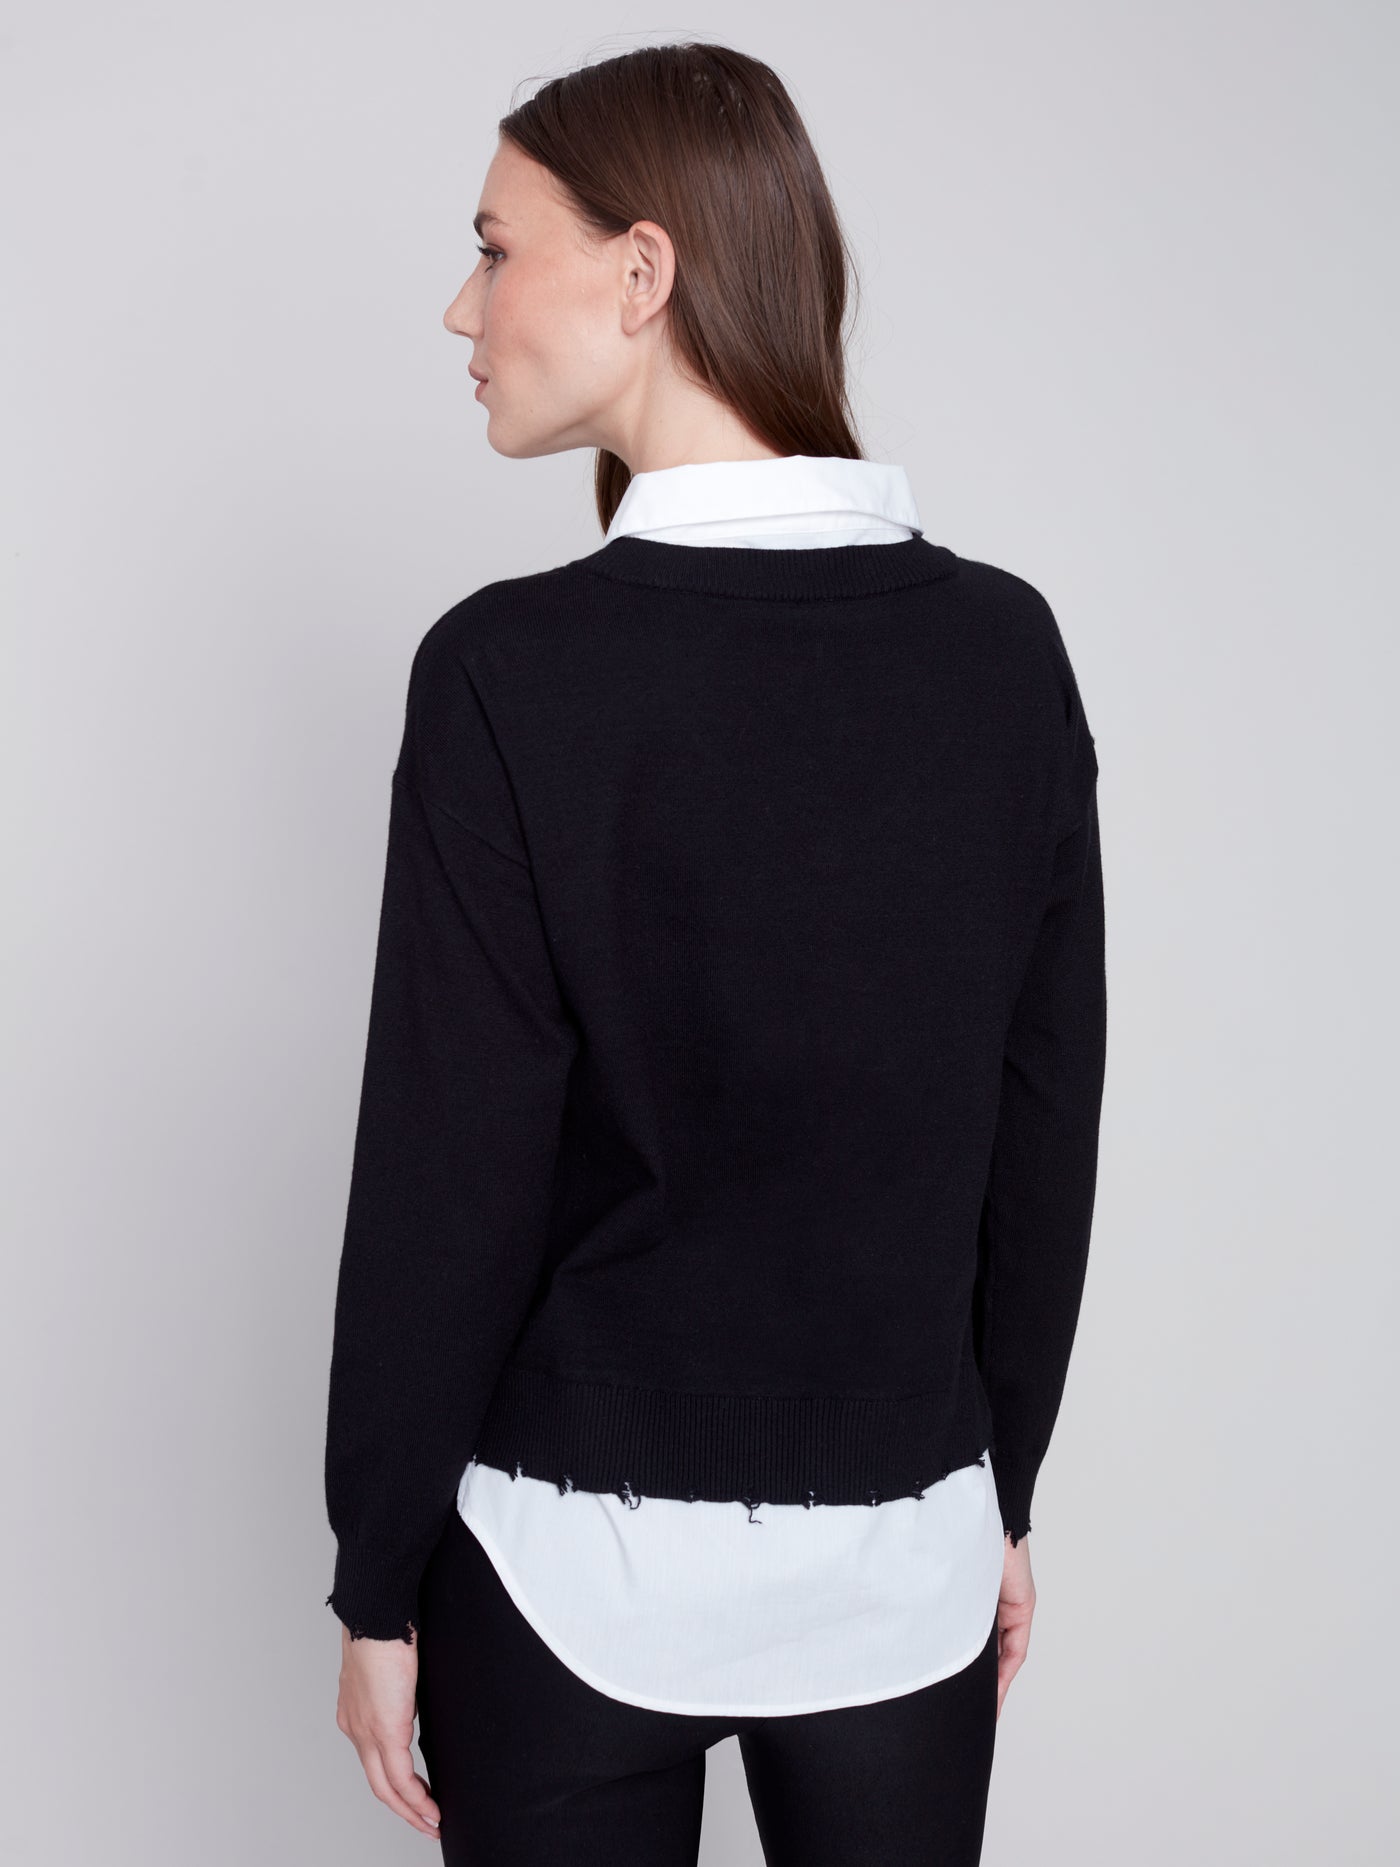 Black Sweater With Shirt Collar